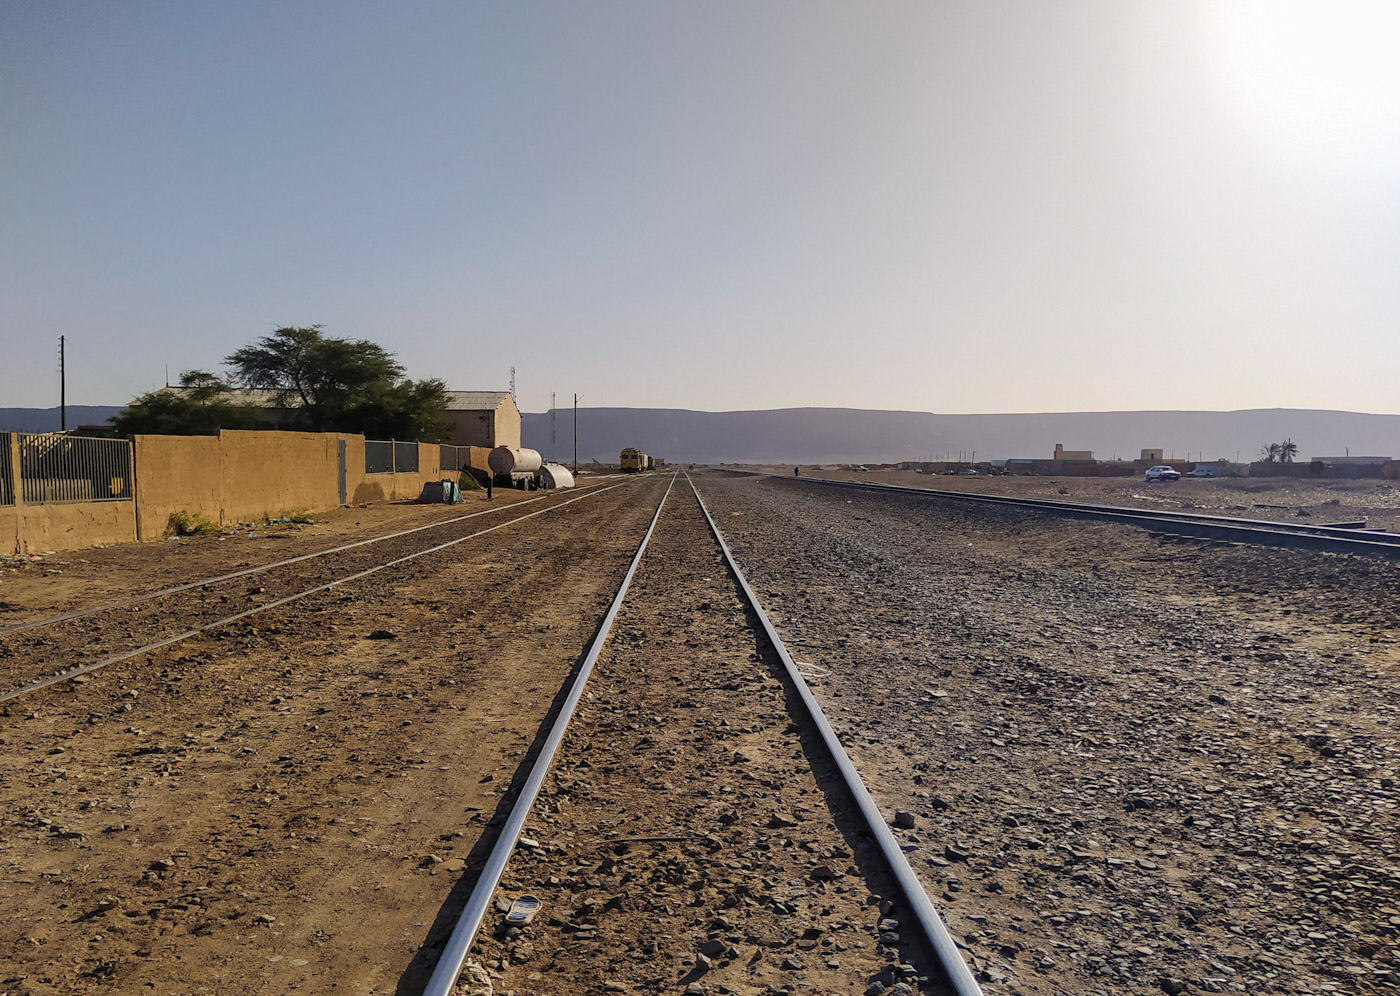 Mauritania Railway — Stations & ways